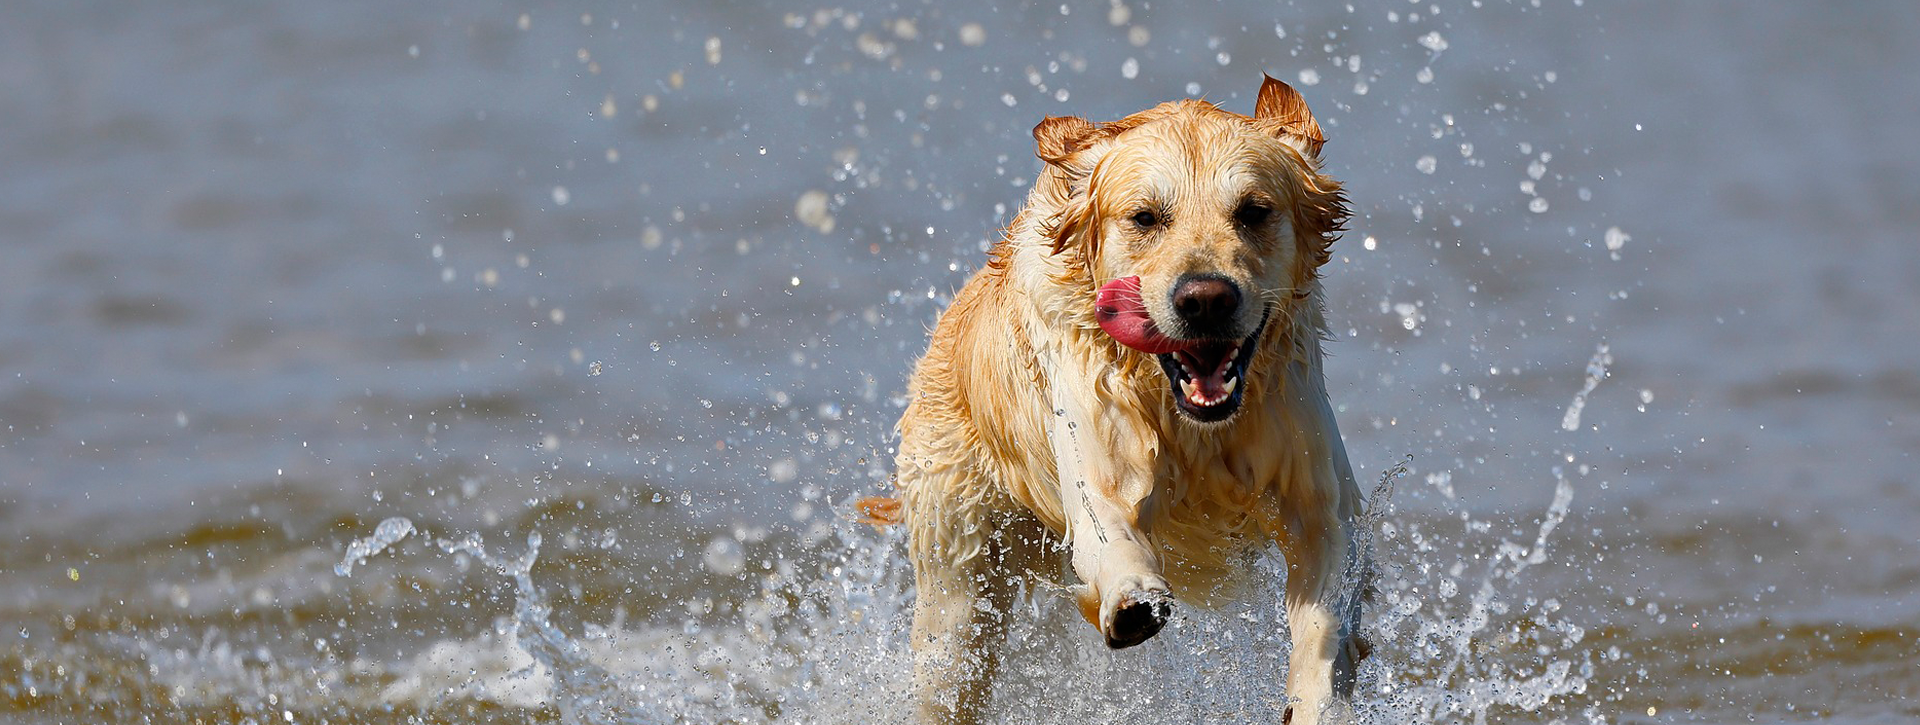 Mandurah Dog Training | Professional Dog Training Services